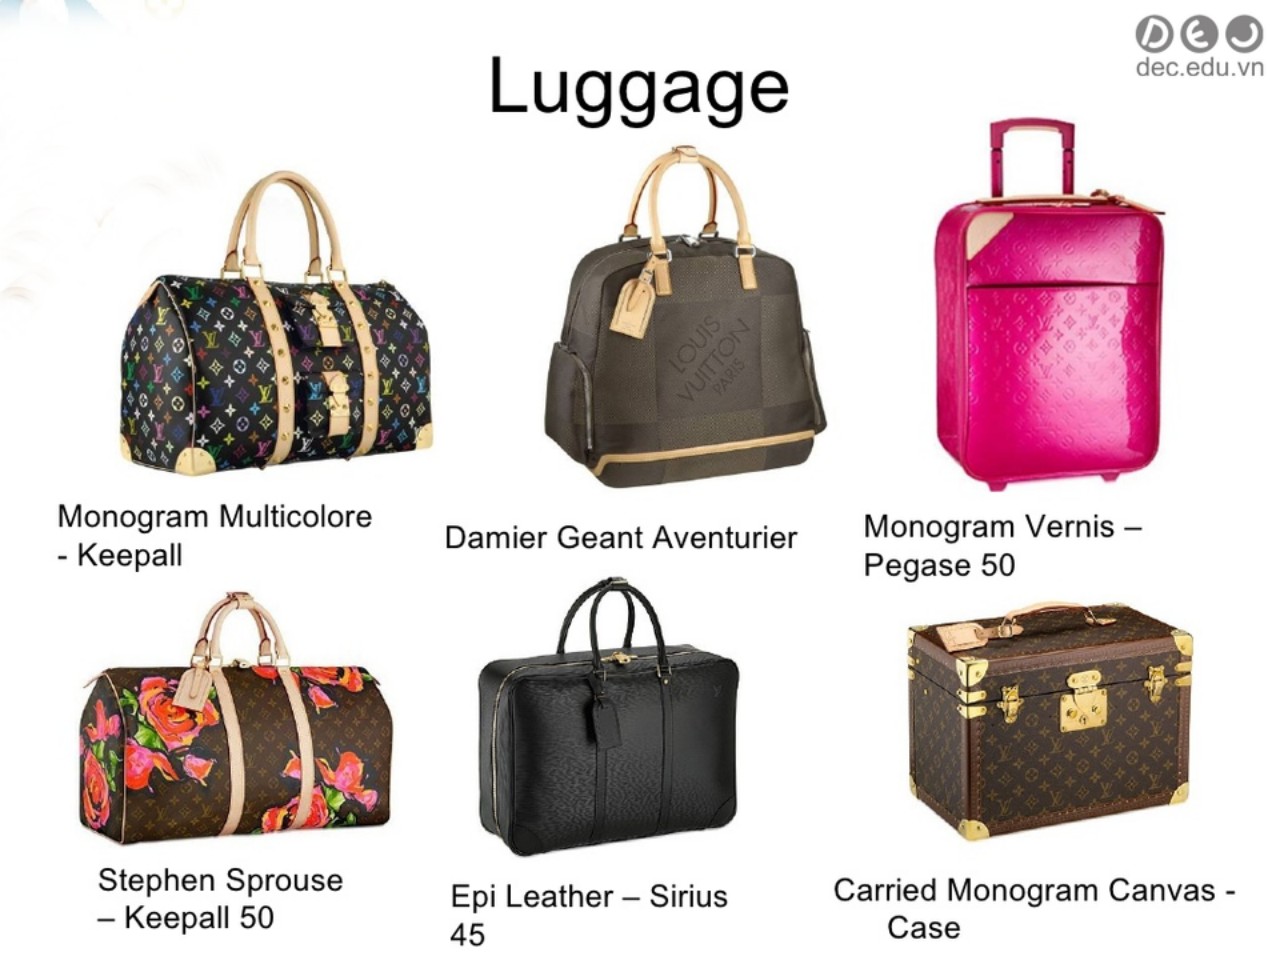 Sản phẩm Luggage